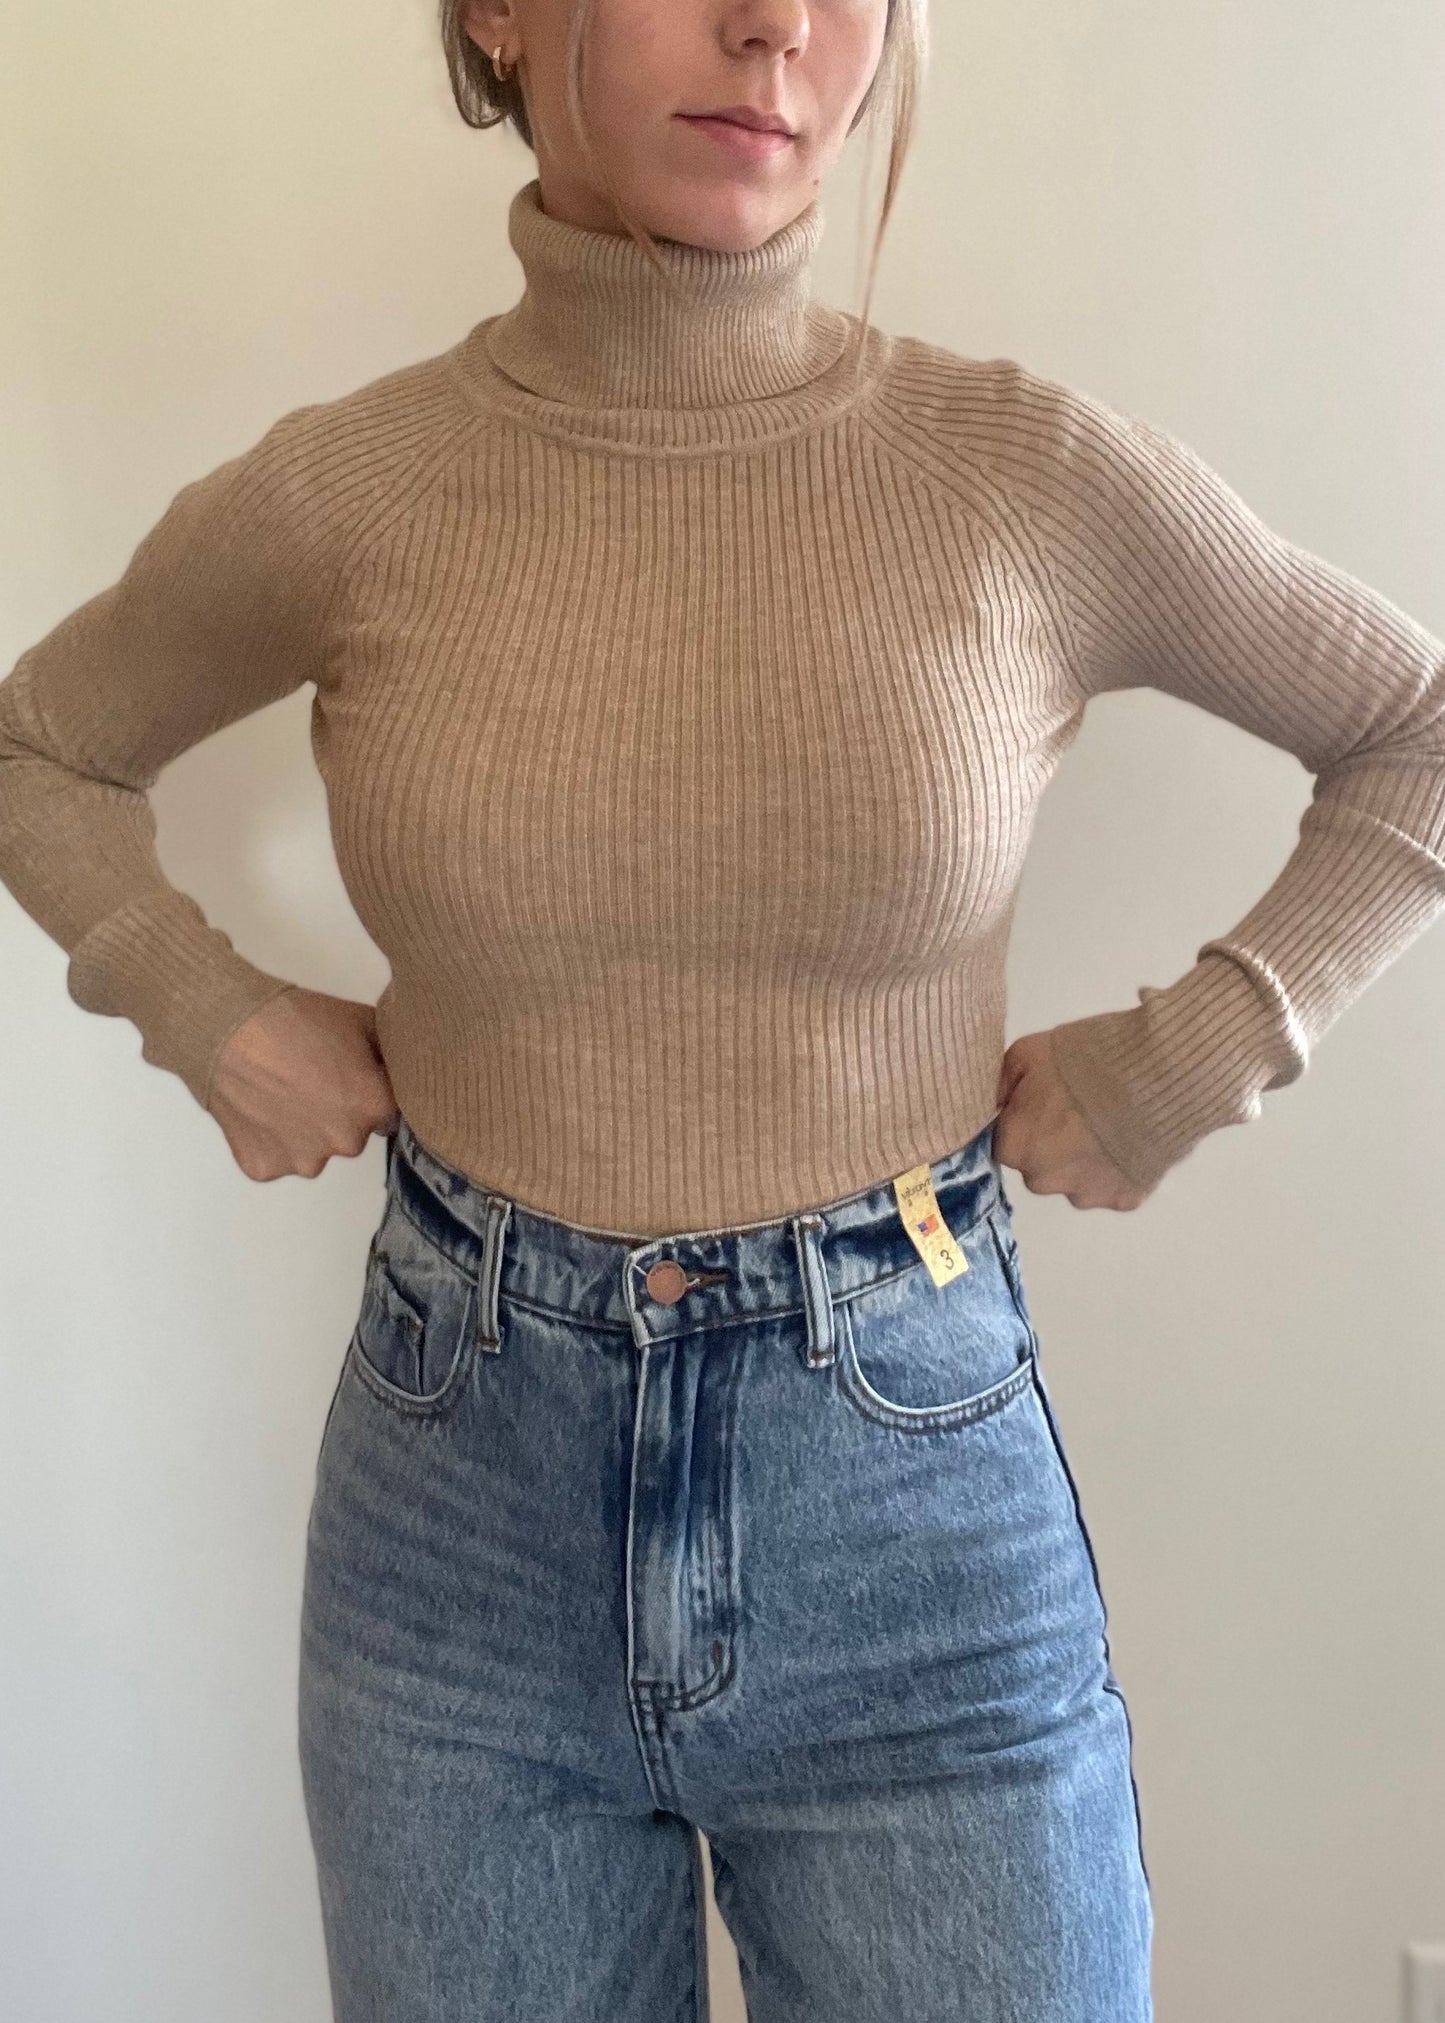 Turtleneck Sweater Top - Oat